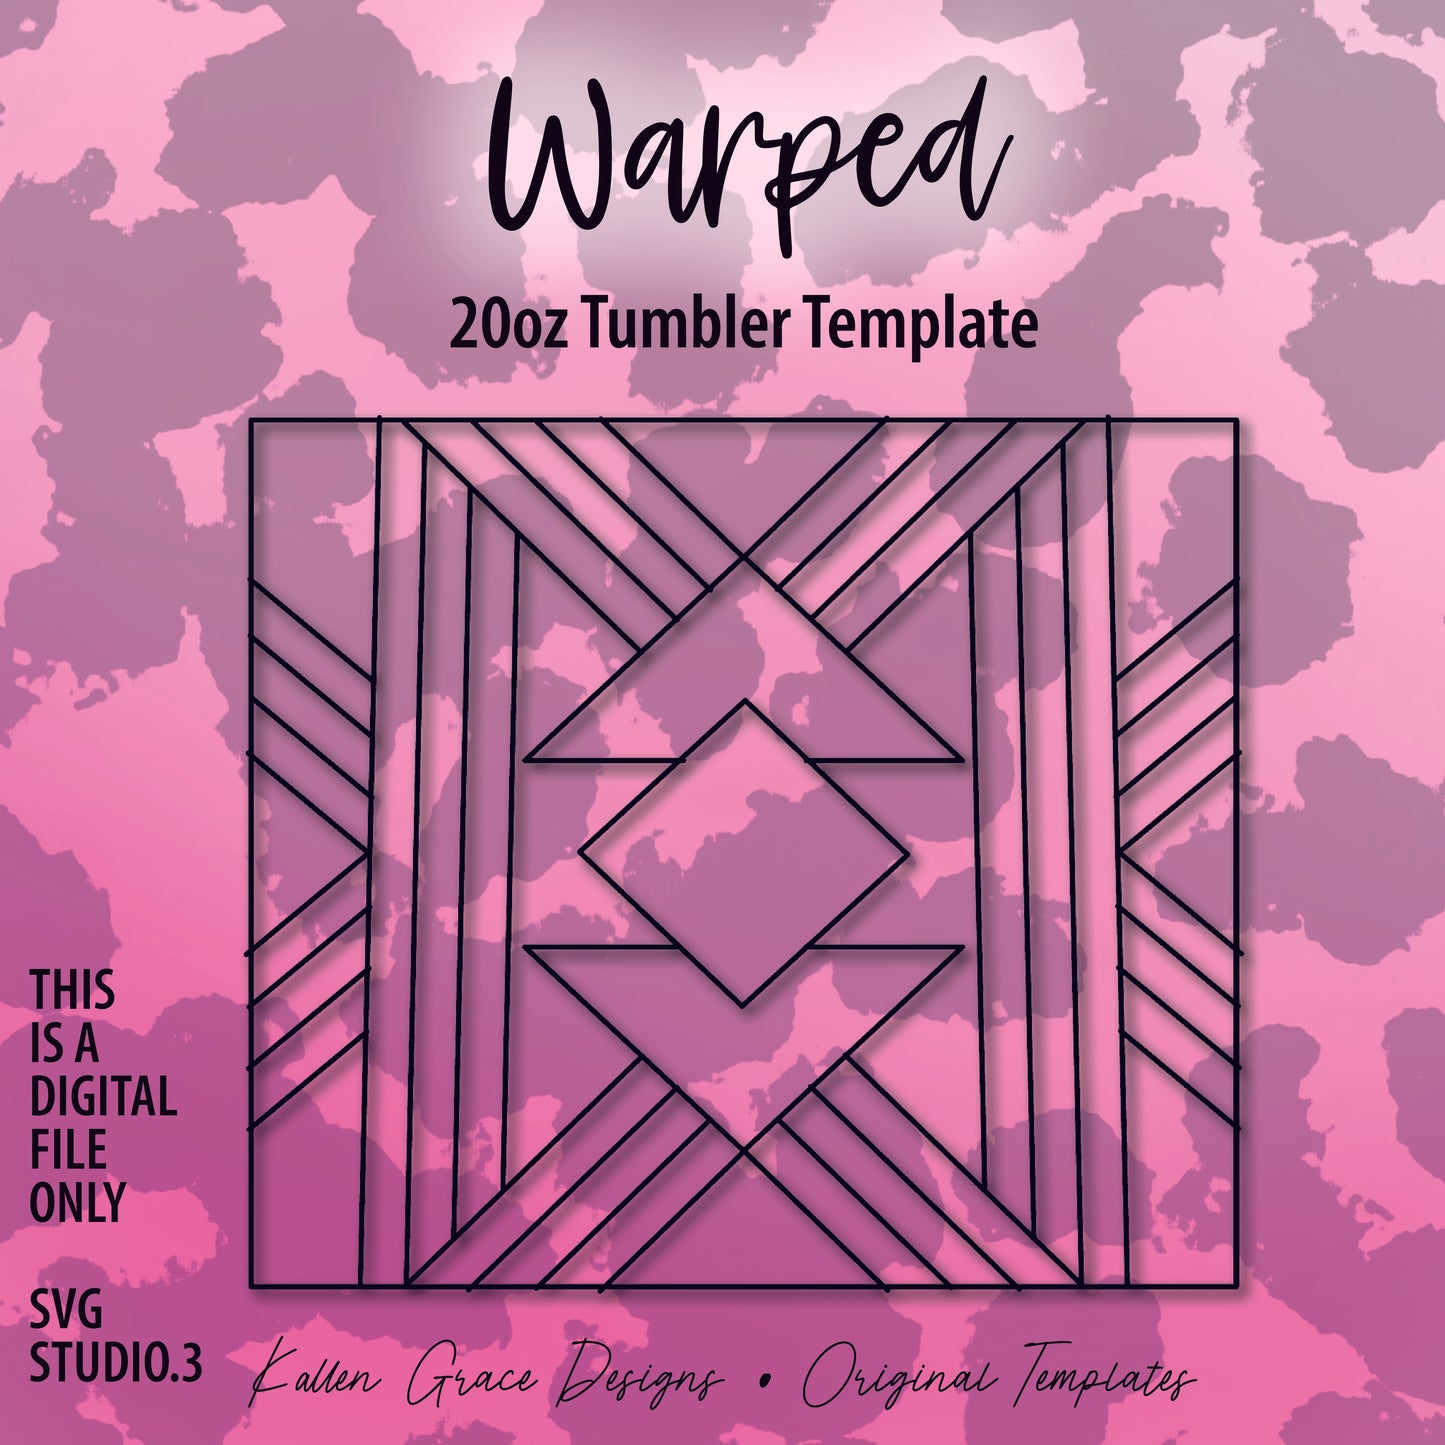 20oz Warped Tumbler Template